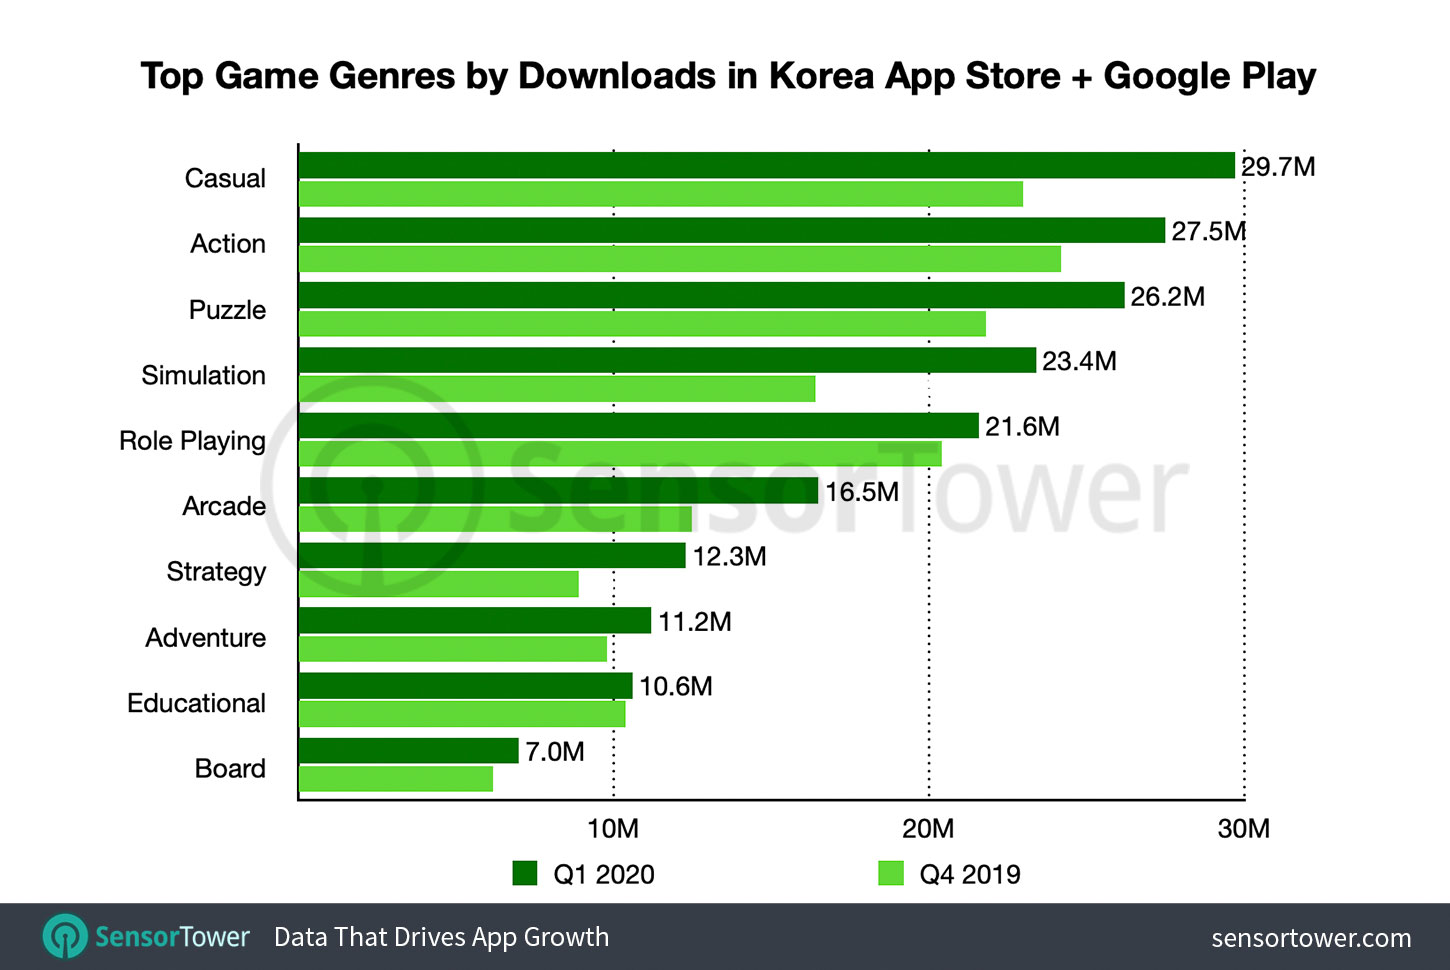 South Korea Mobile Game Genre Downloads for Q1 2020